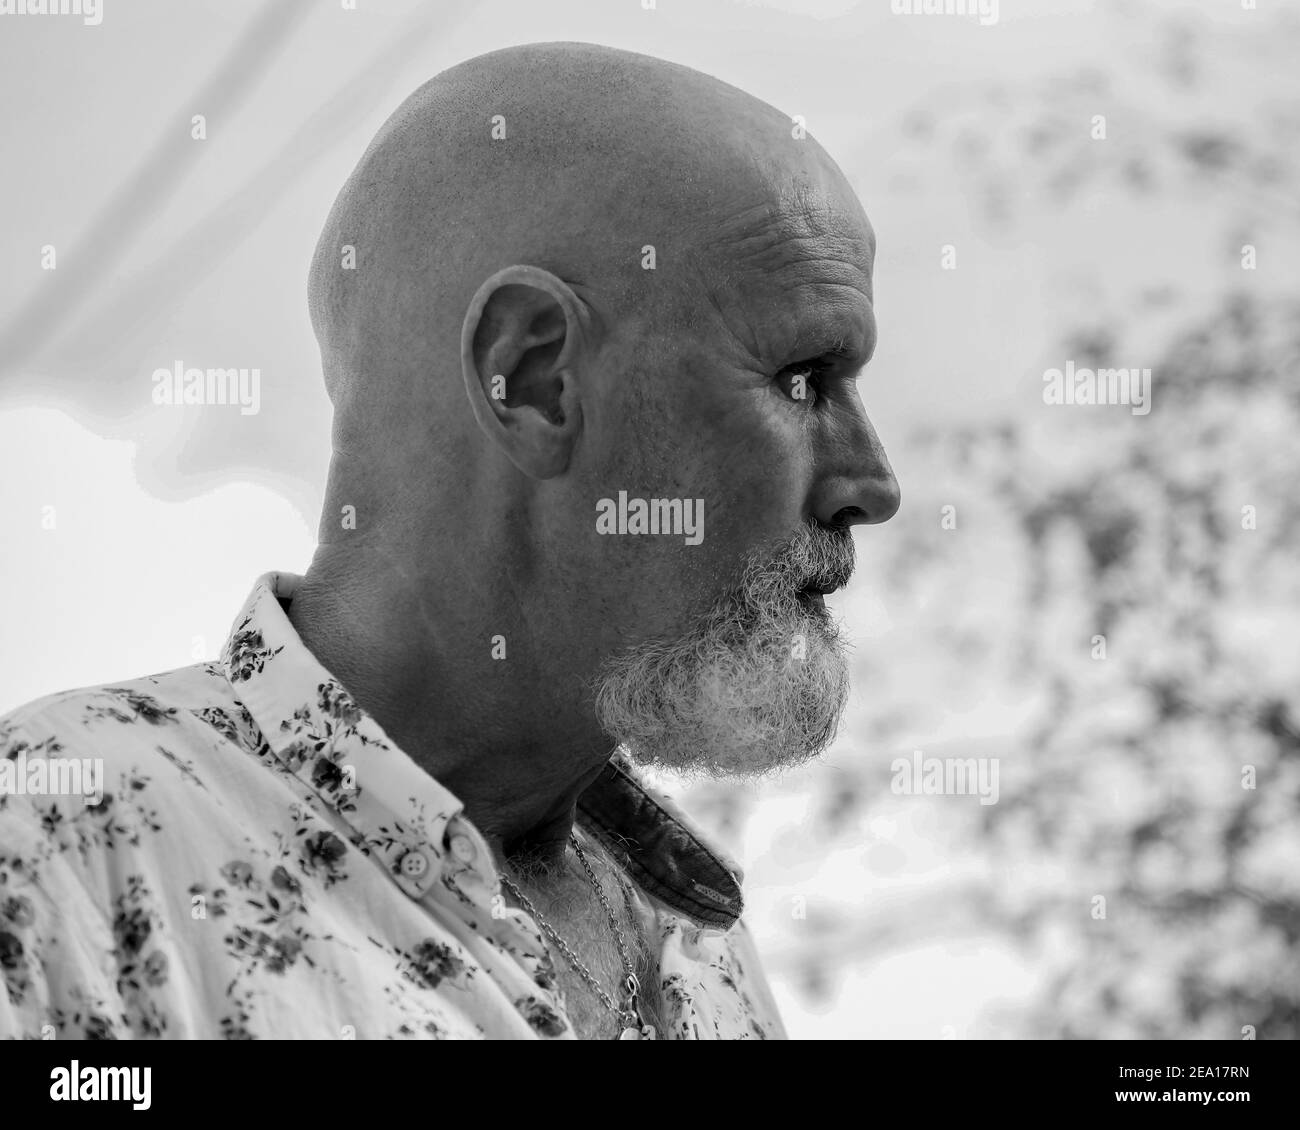 Dobrota, Montenegro, Apr 28, 2019: Portrait of a bald man with a gray beard (B/W) Stock Photo